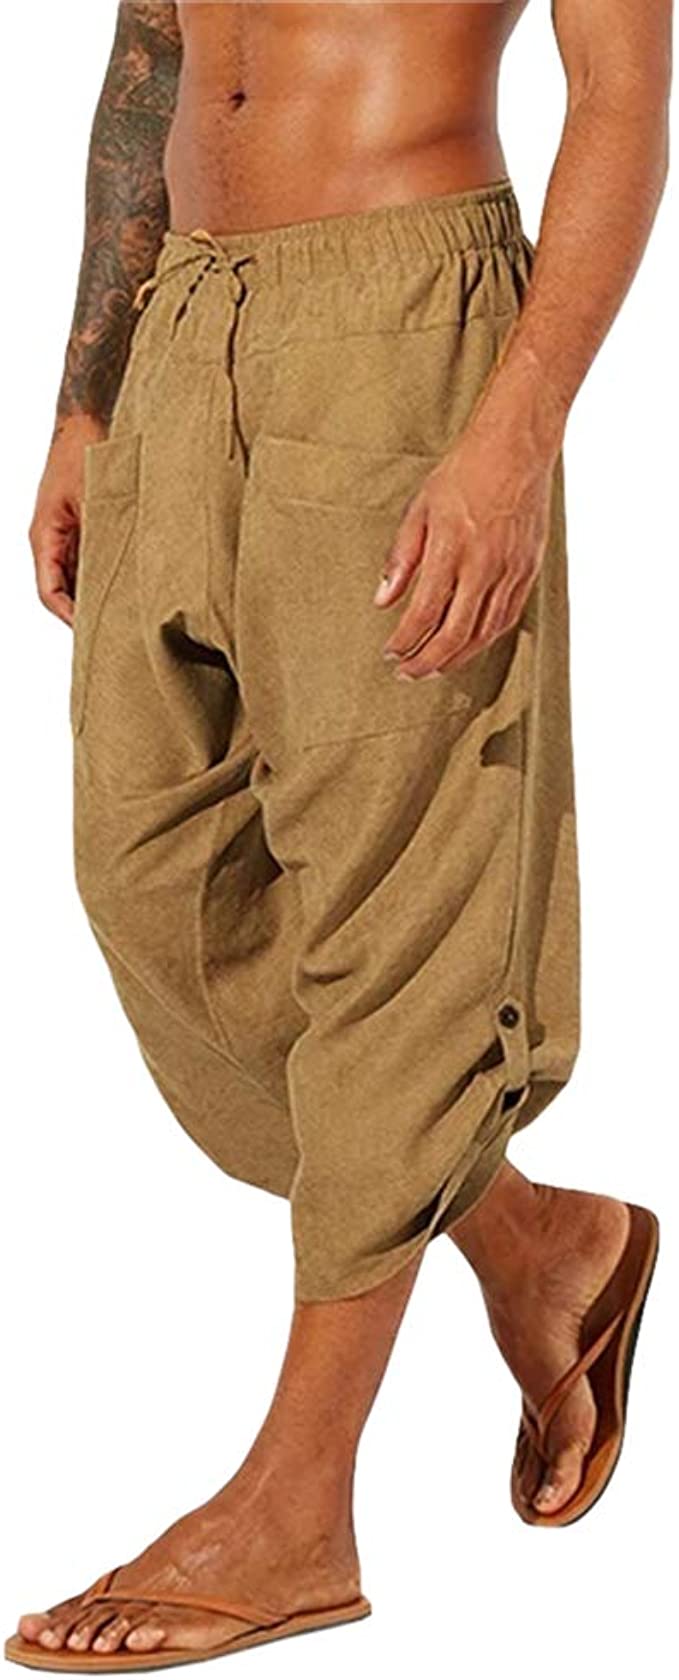 men's yoga pants